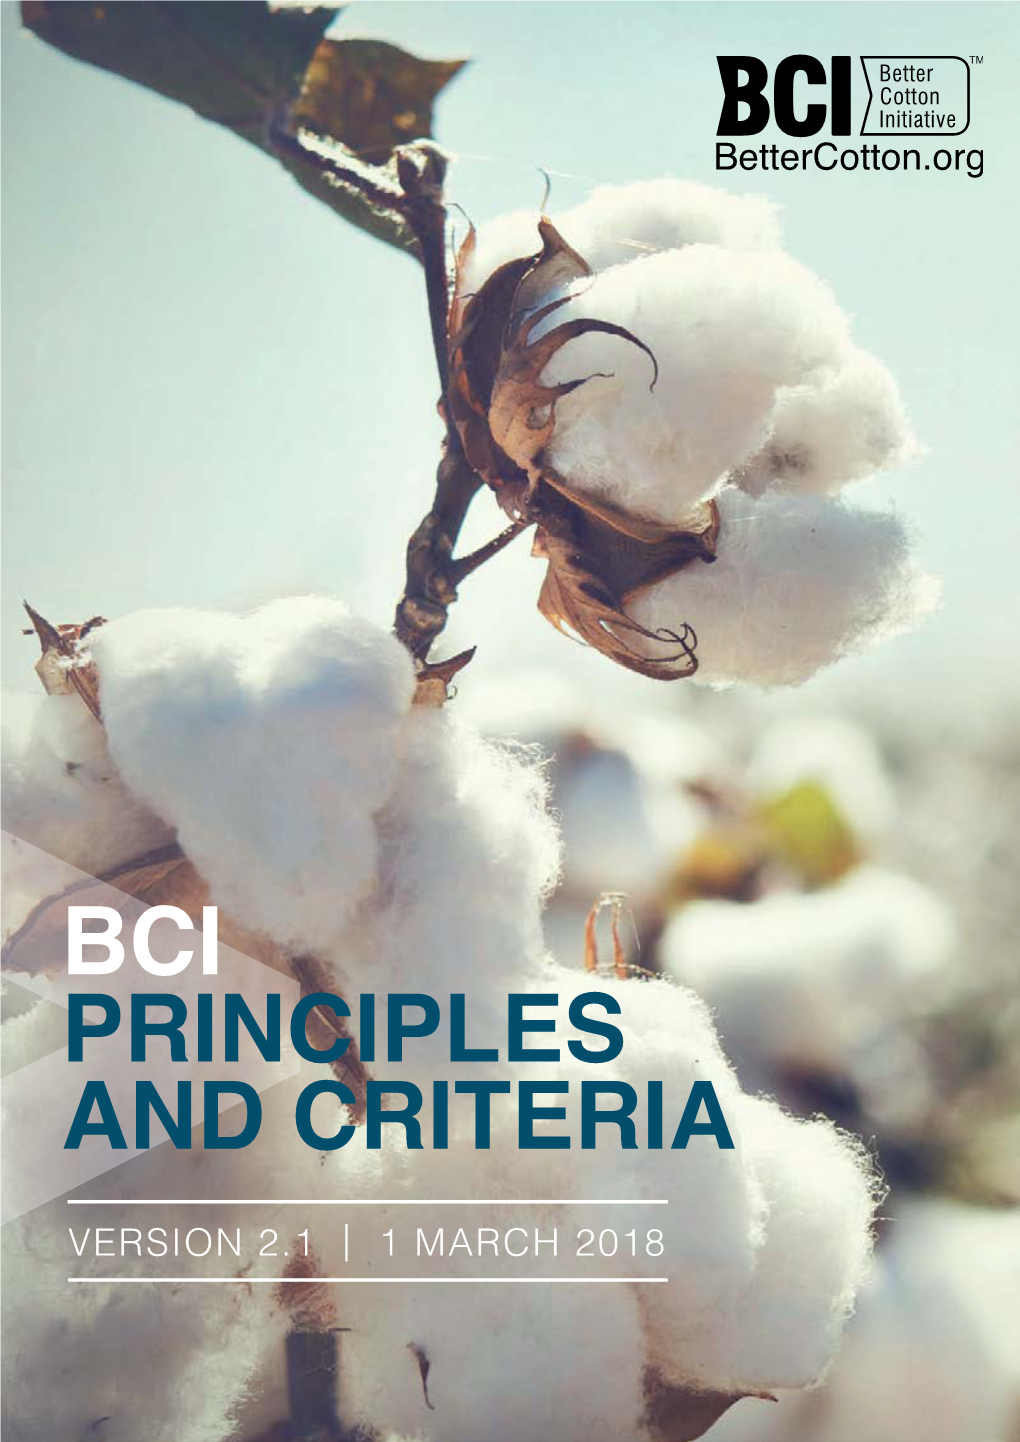 Bci Principles and Criteria Version 2.1 | 1 March 2018